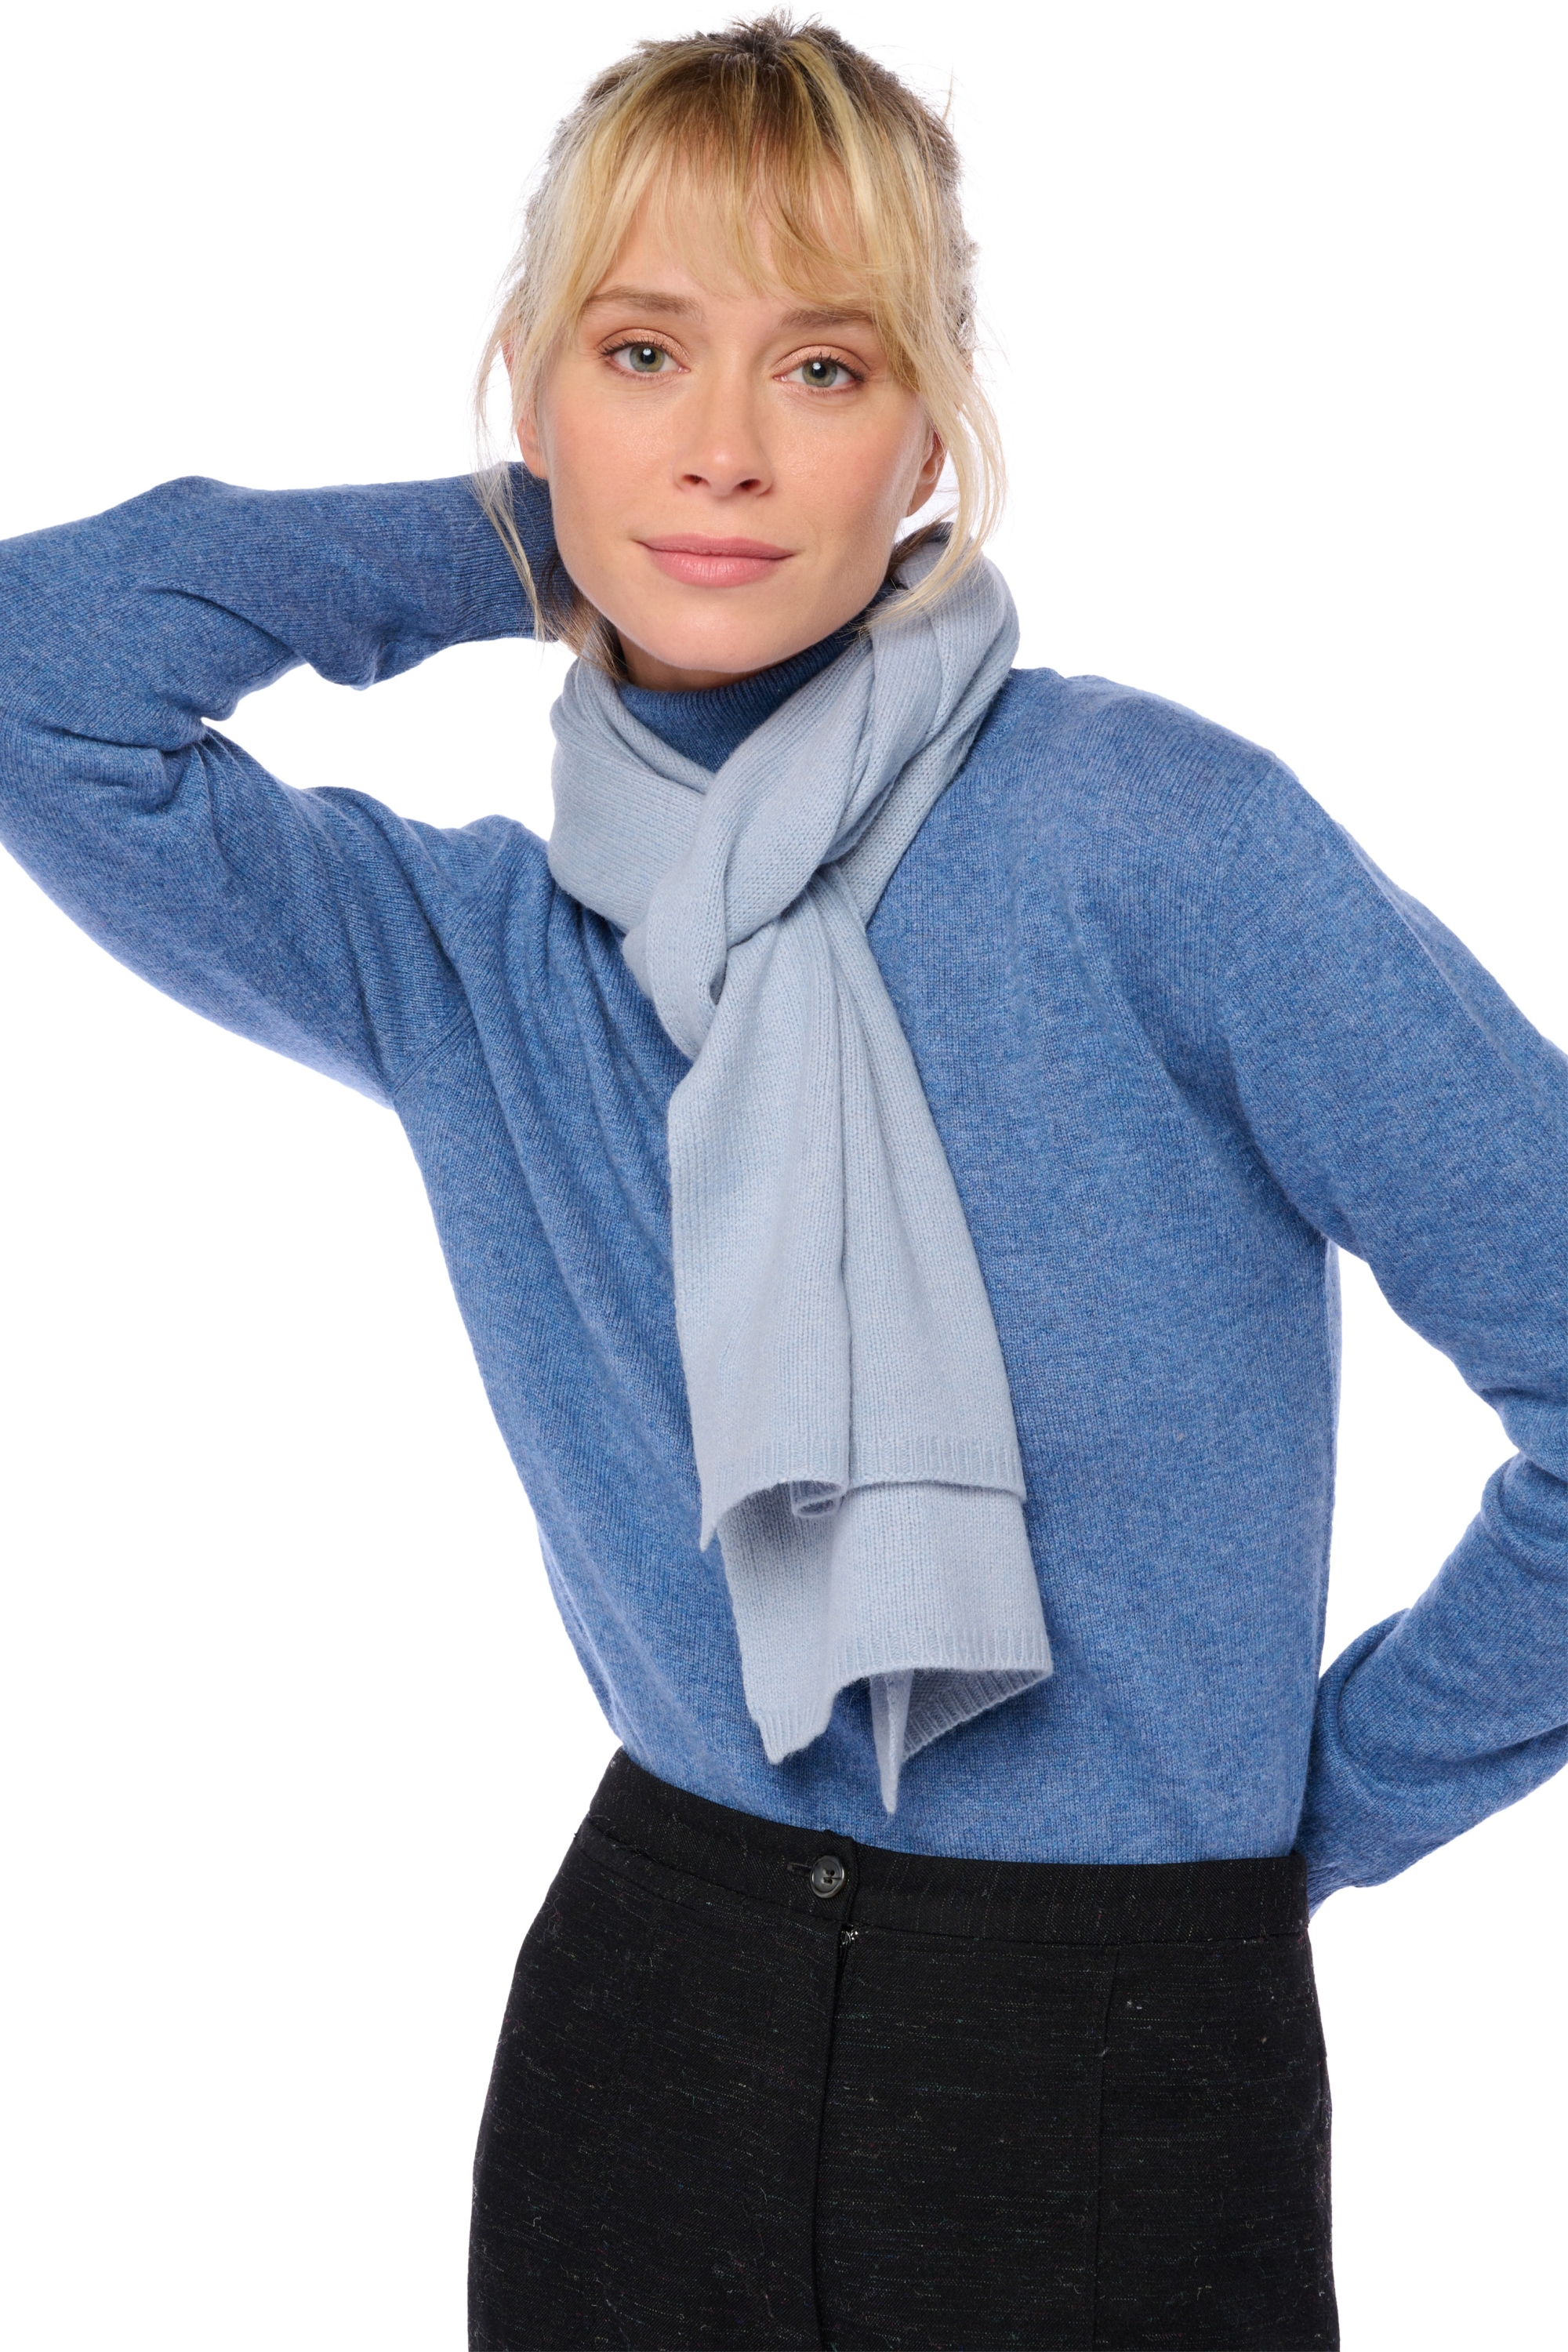 Yak accessories scarf mufflers yakozone sky blue 160 x 30 cm